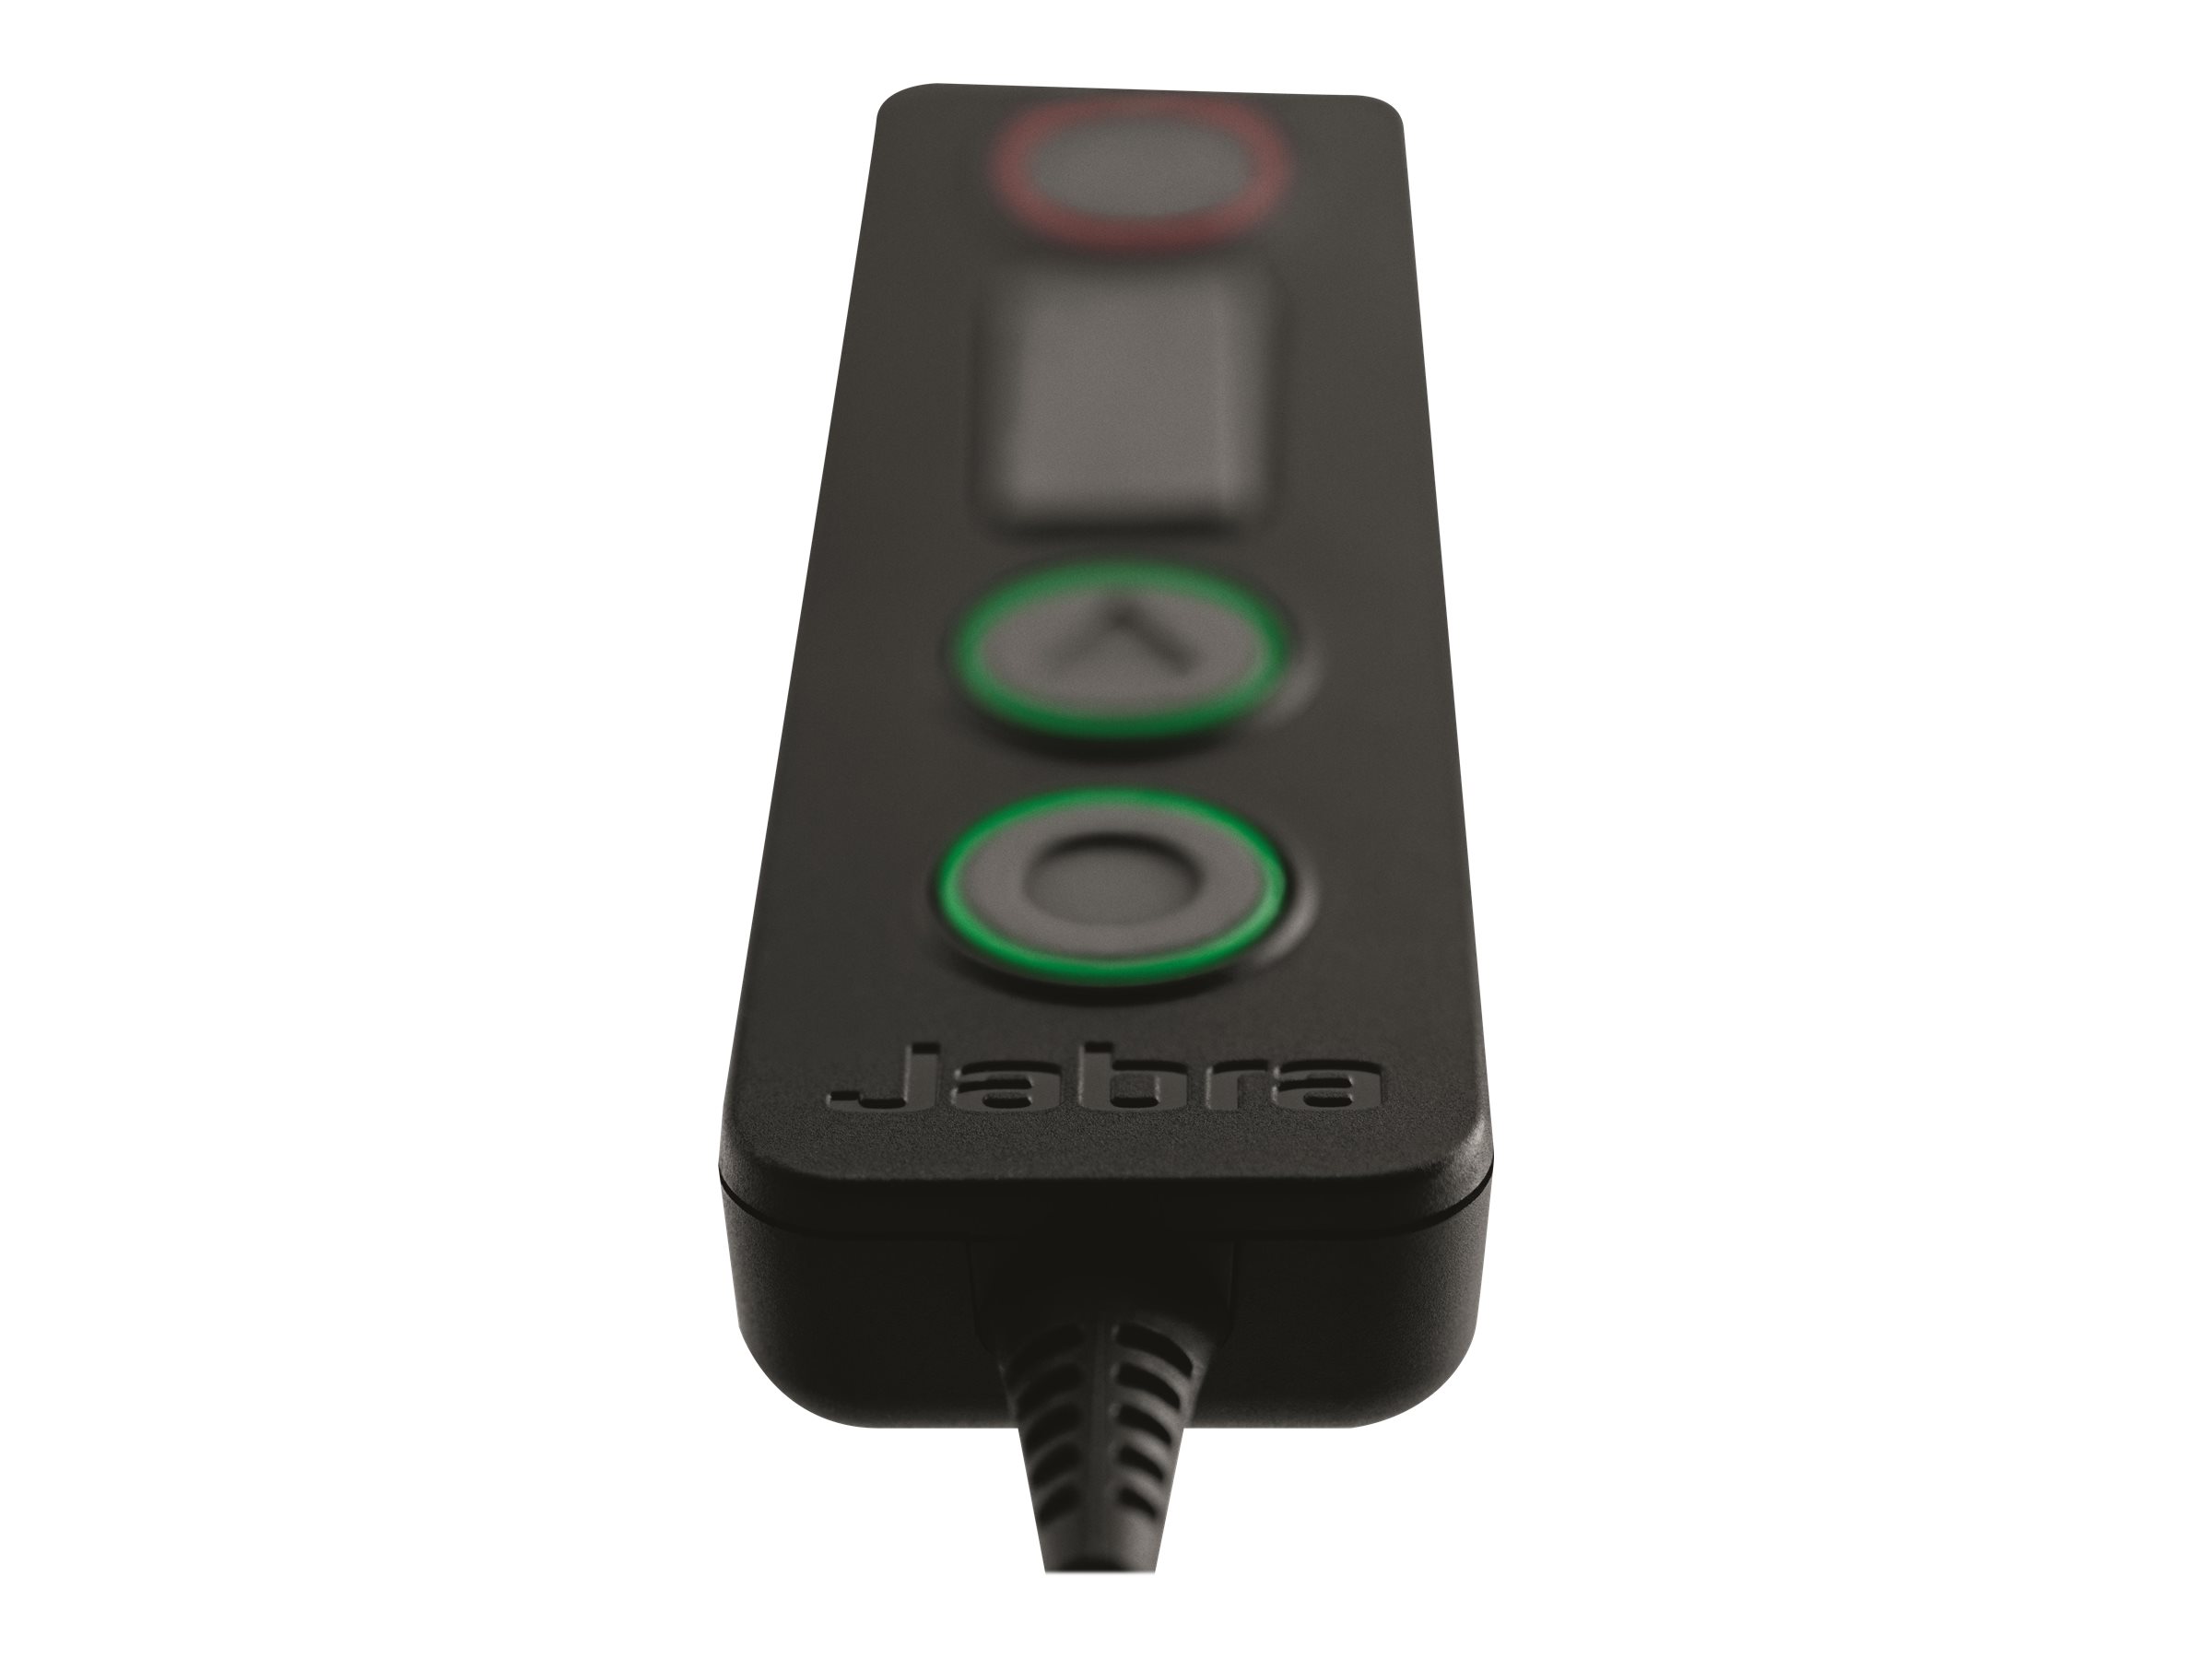 Jabra BIZ 2300 MS QD Mono - Headset - On-Ear